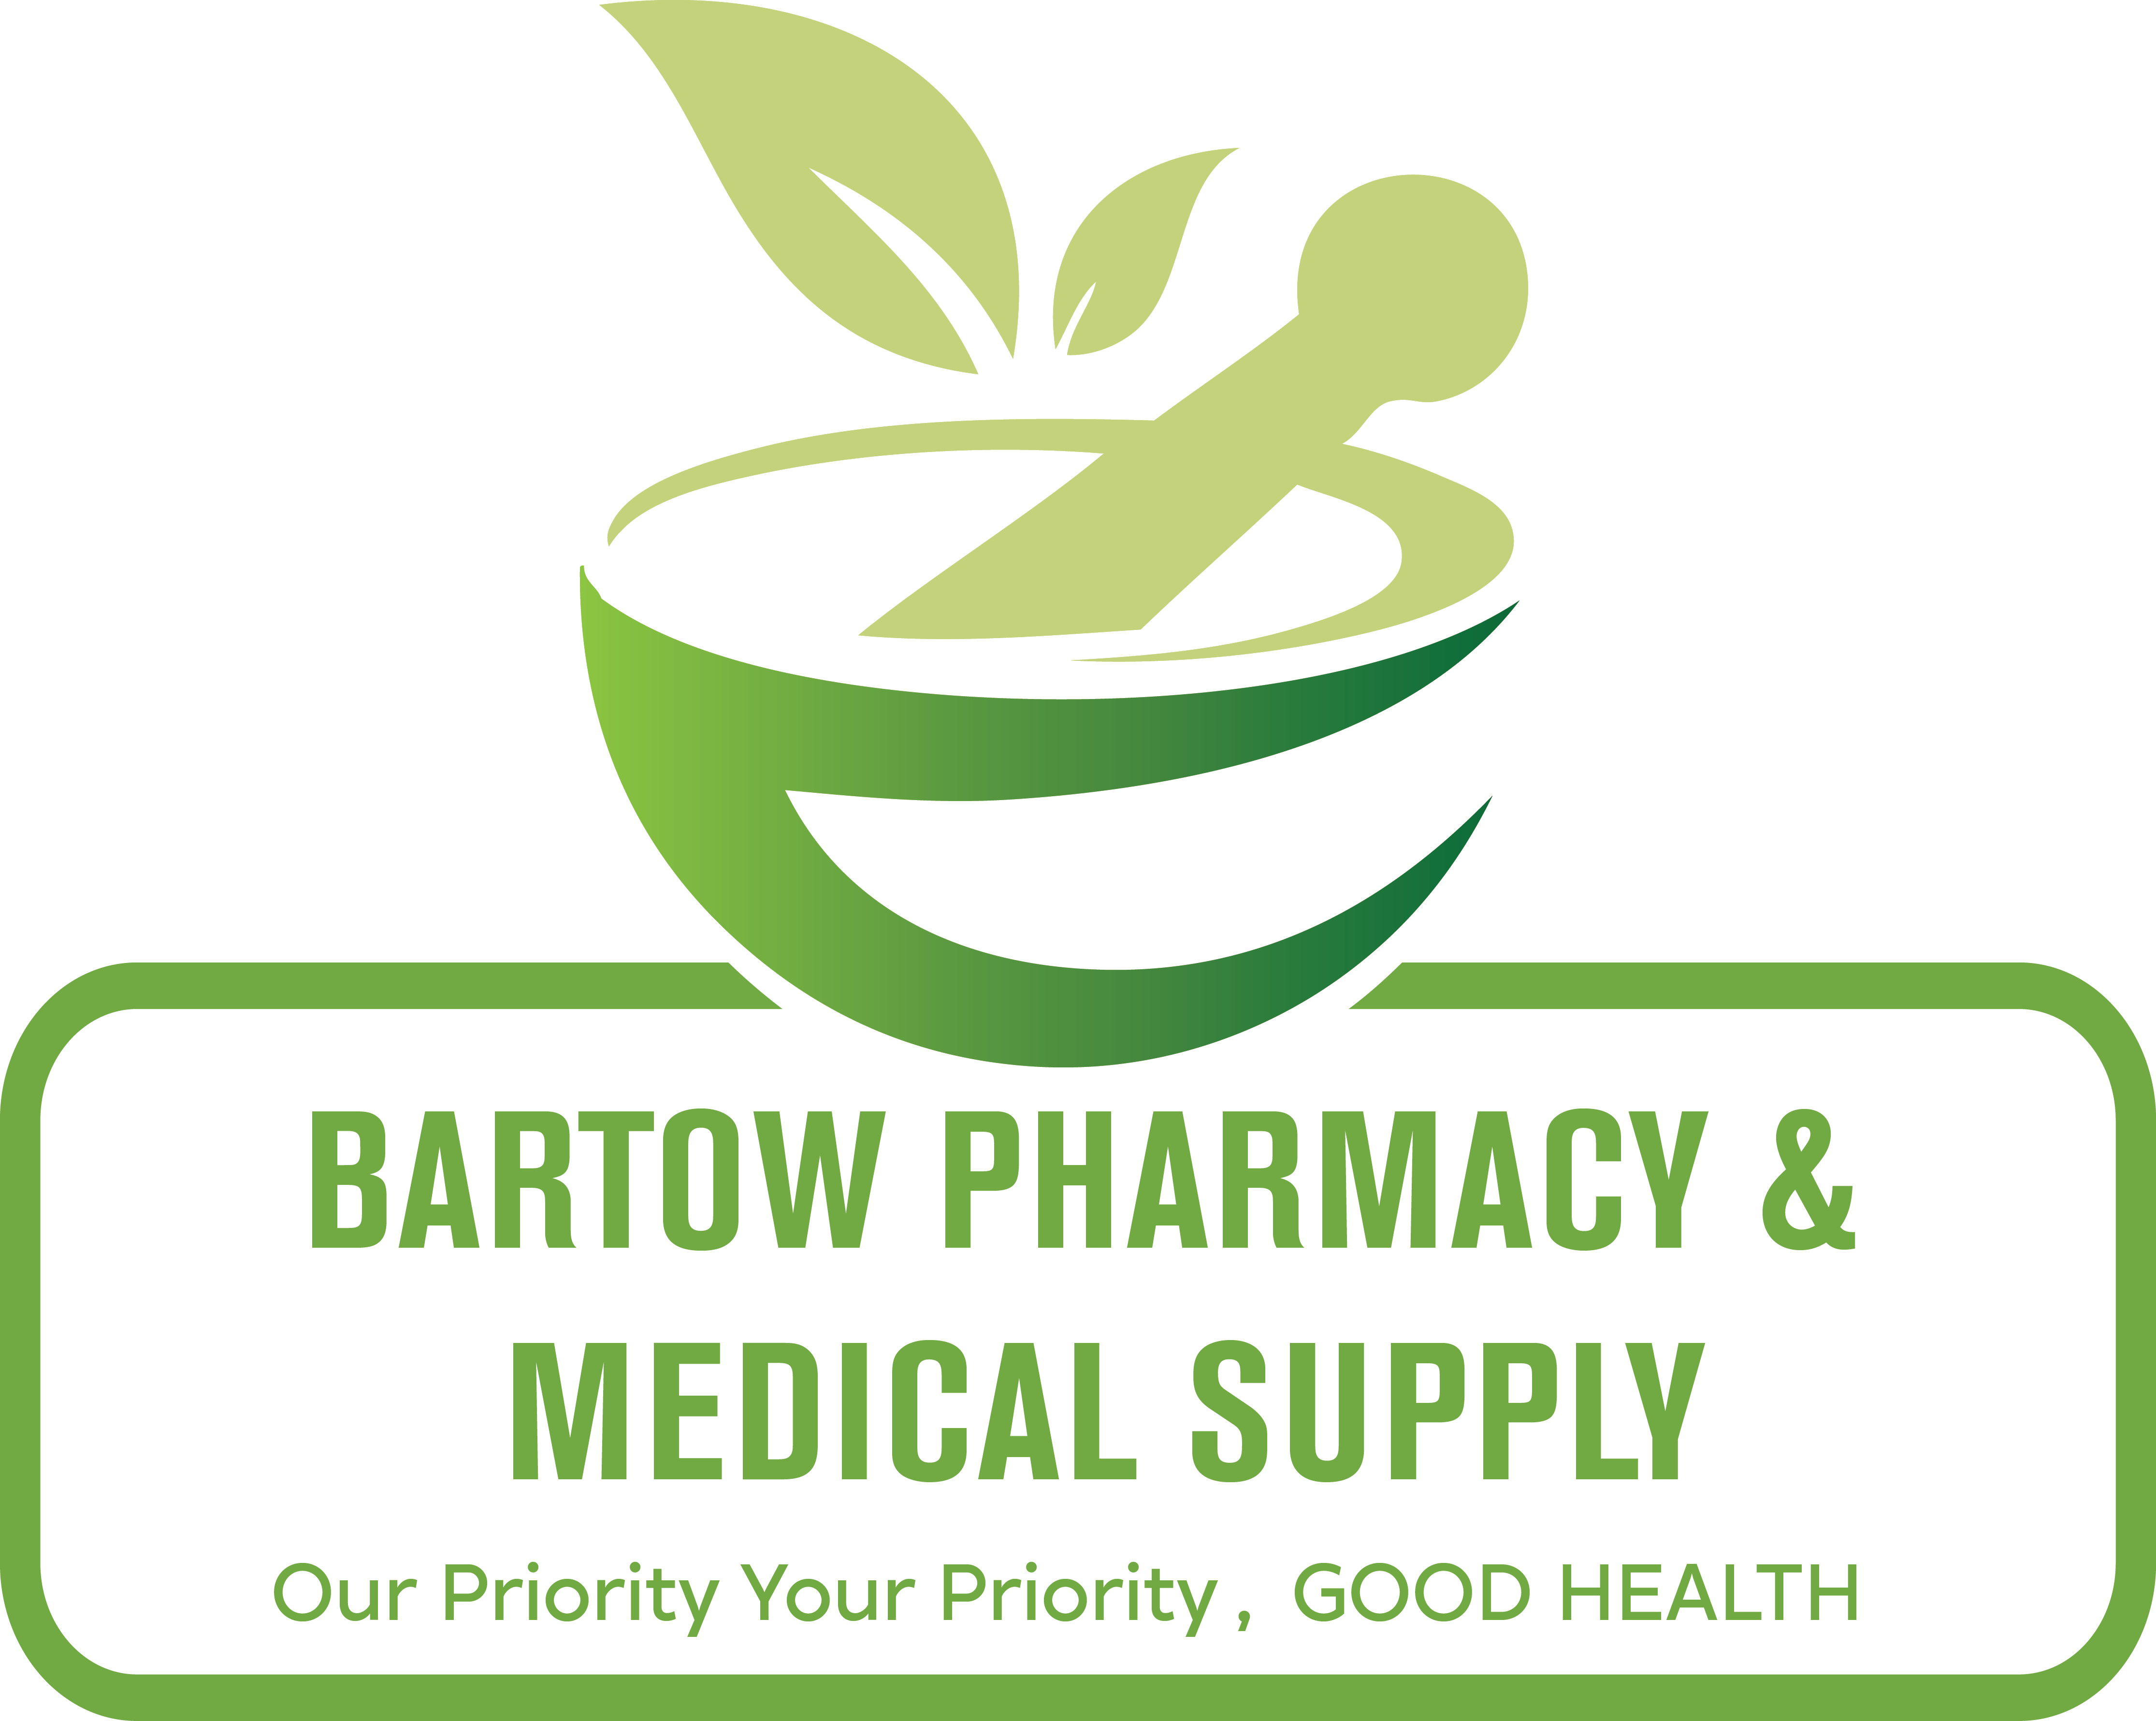 Bartow Pharmacy & Medical Supply